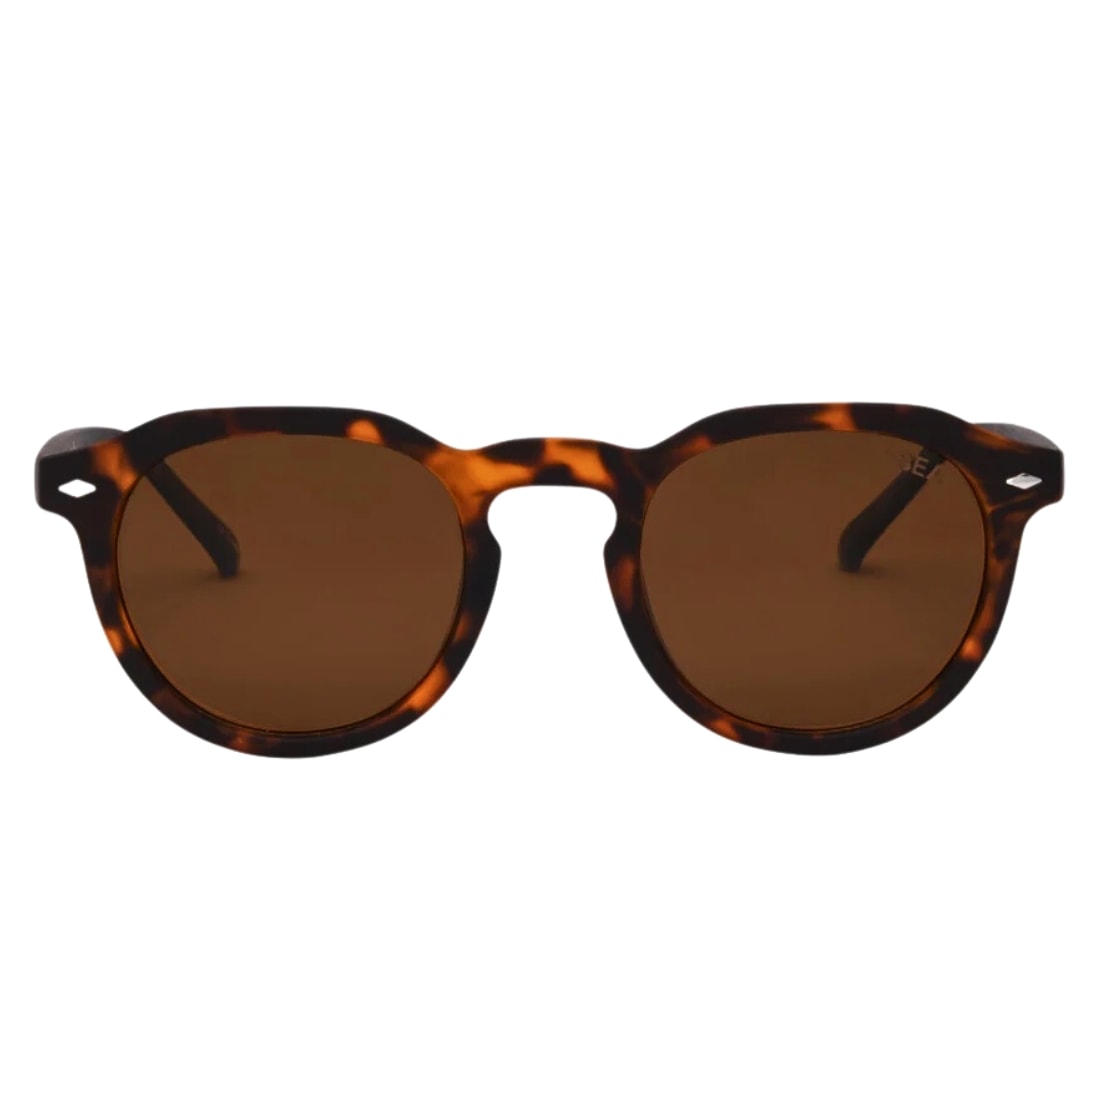 I-Sea Blair Conklin Round Polarised Sunglasses - Tortoise/Brown Polarized Lens - Round Sunglasses by I-Sea